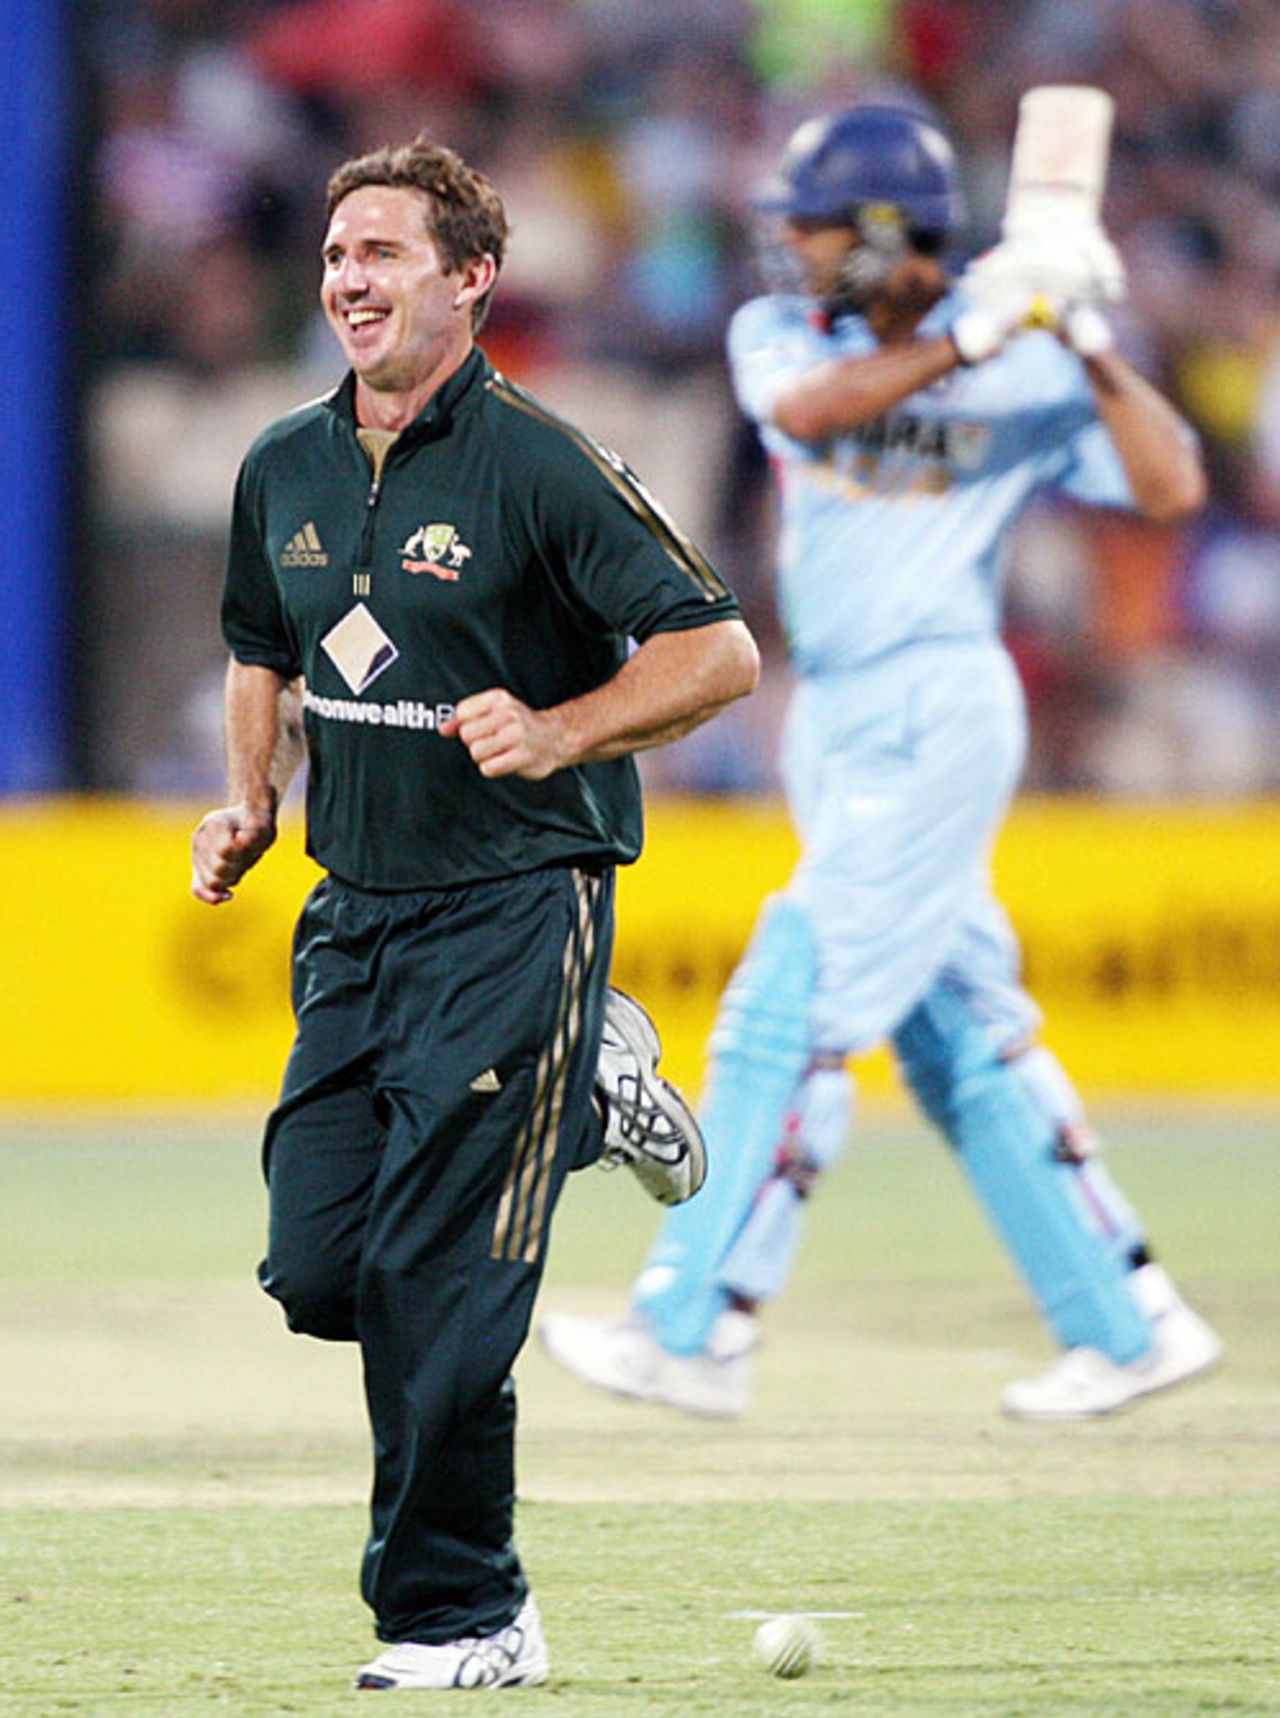 Brad Hogg had Yuvraj caught for 26, Australia v India, 7th match, CB Series, Adelaide, February 17, 2008